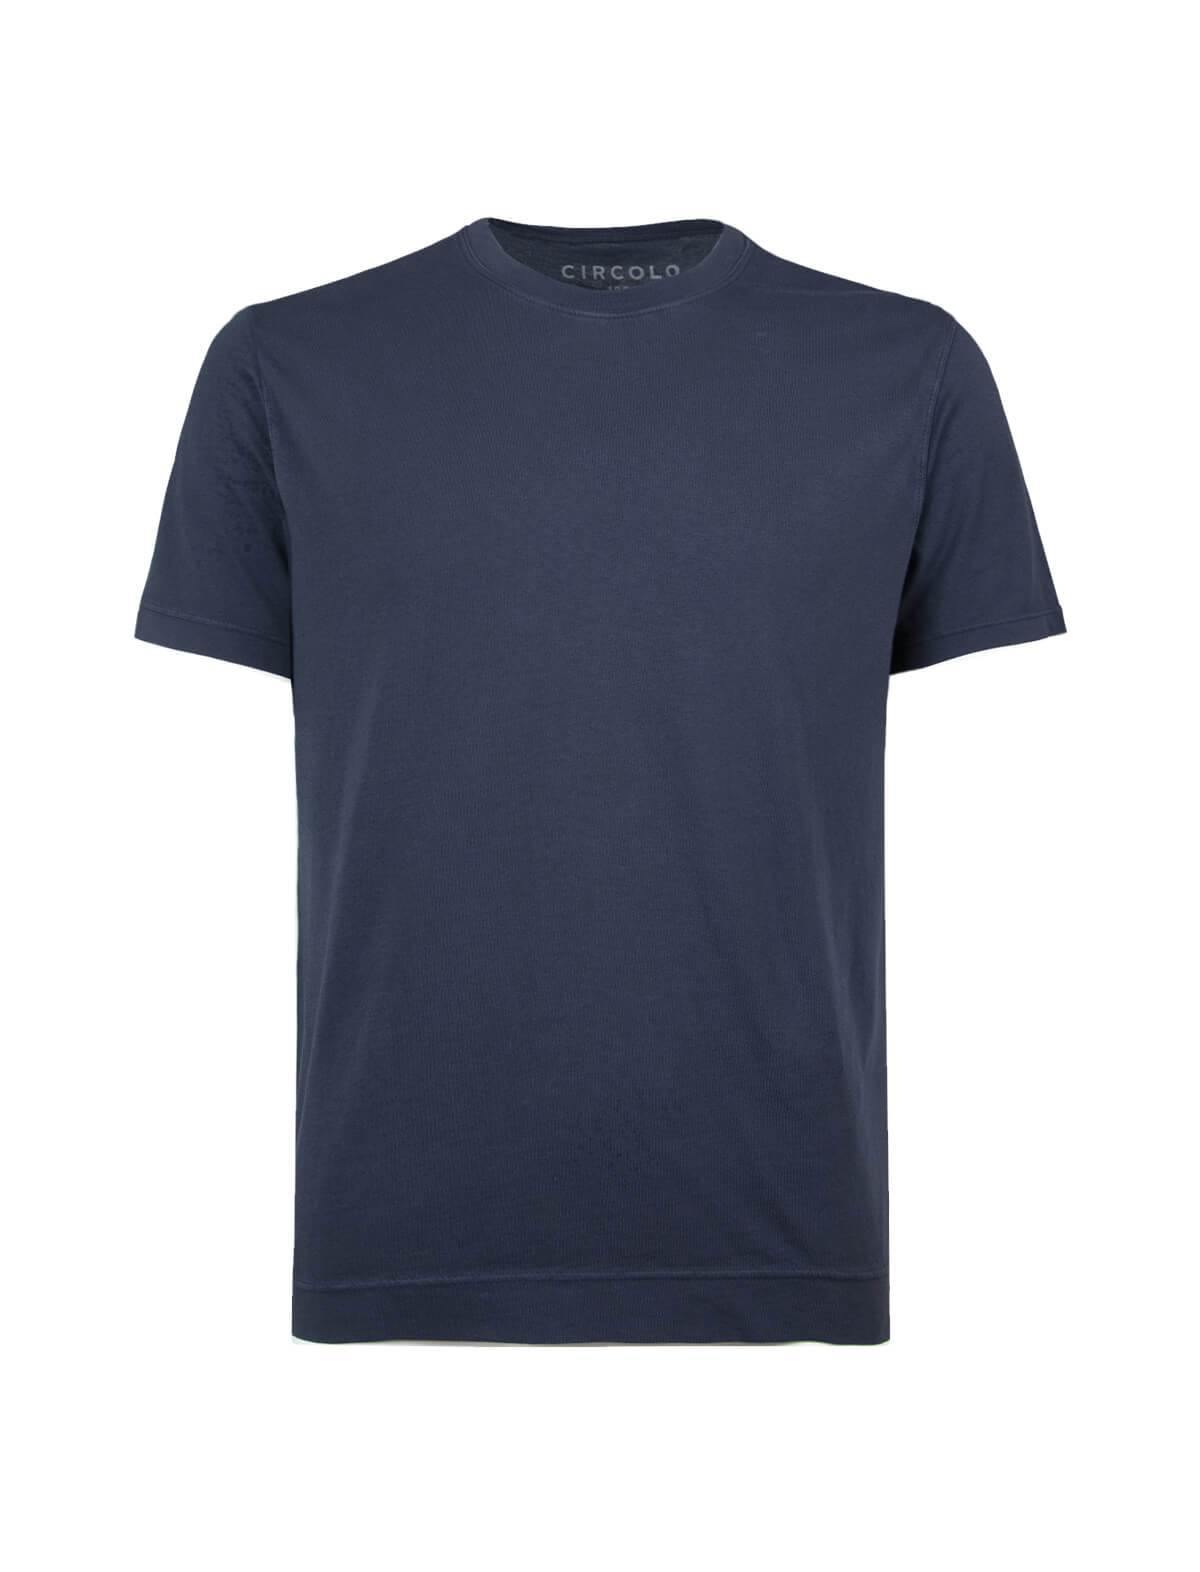 CIRCOLO 1901 Crew Neck Cotton T-Shirt in Blue Black | CLOSET Singapore